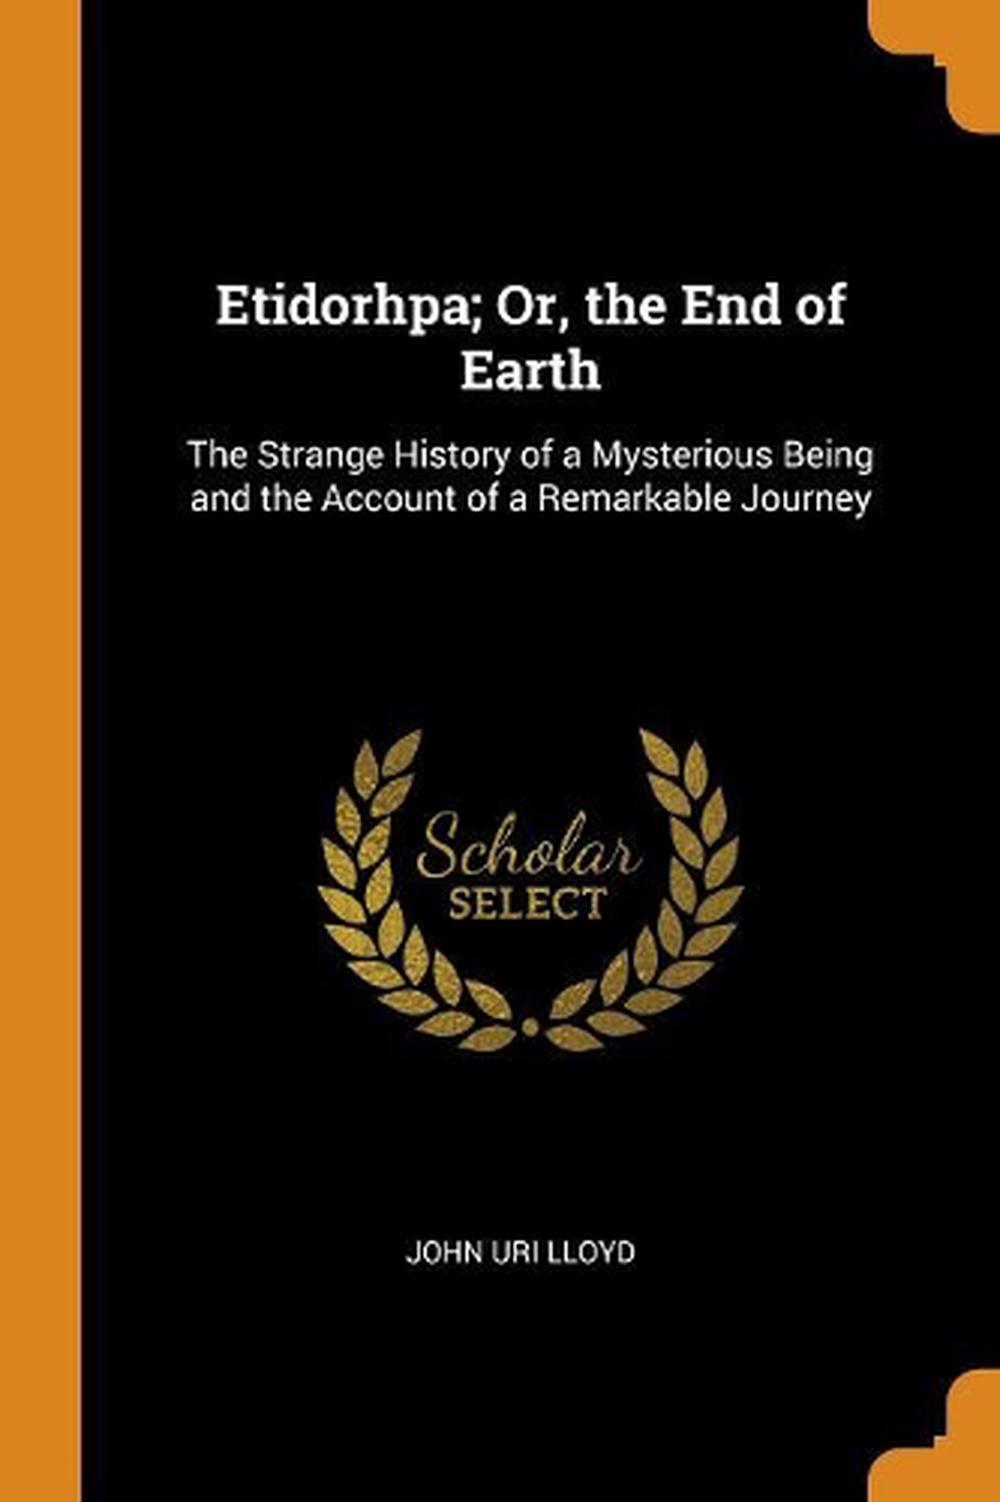 etidorhpa book